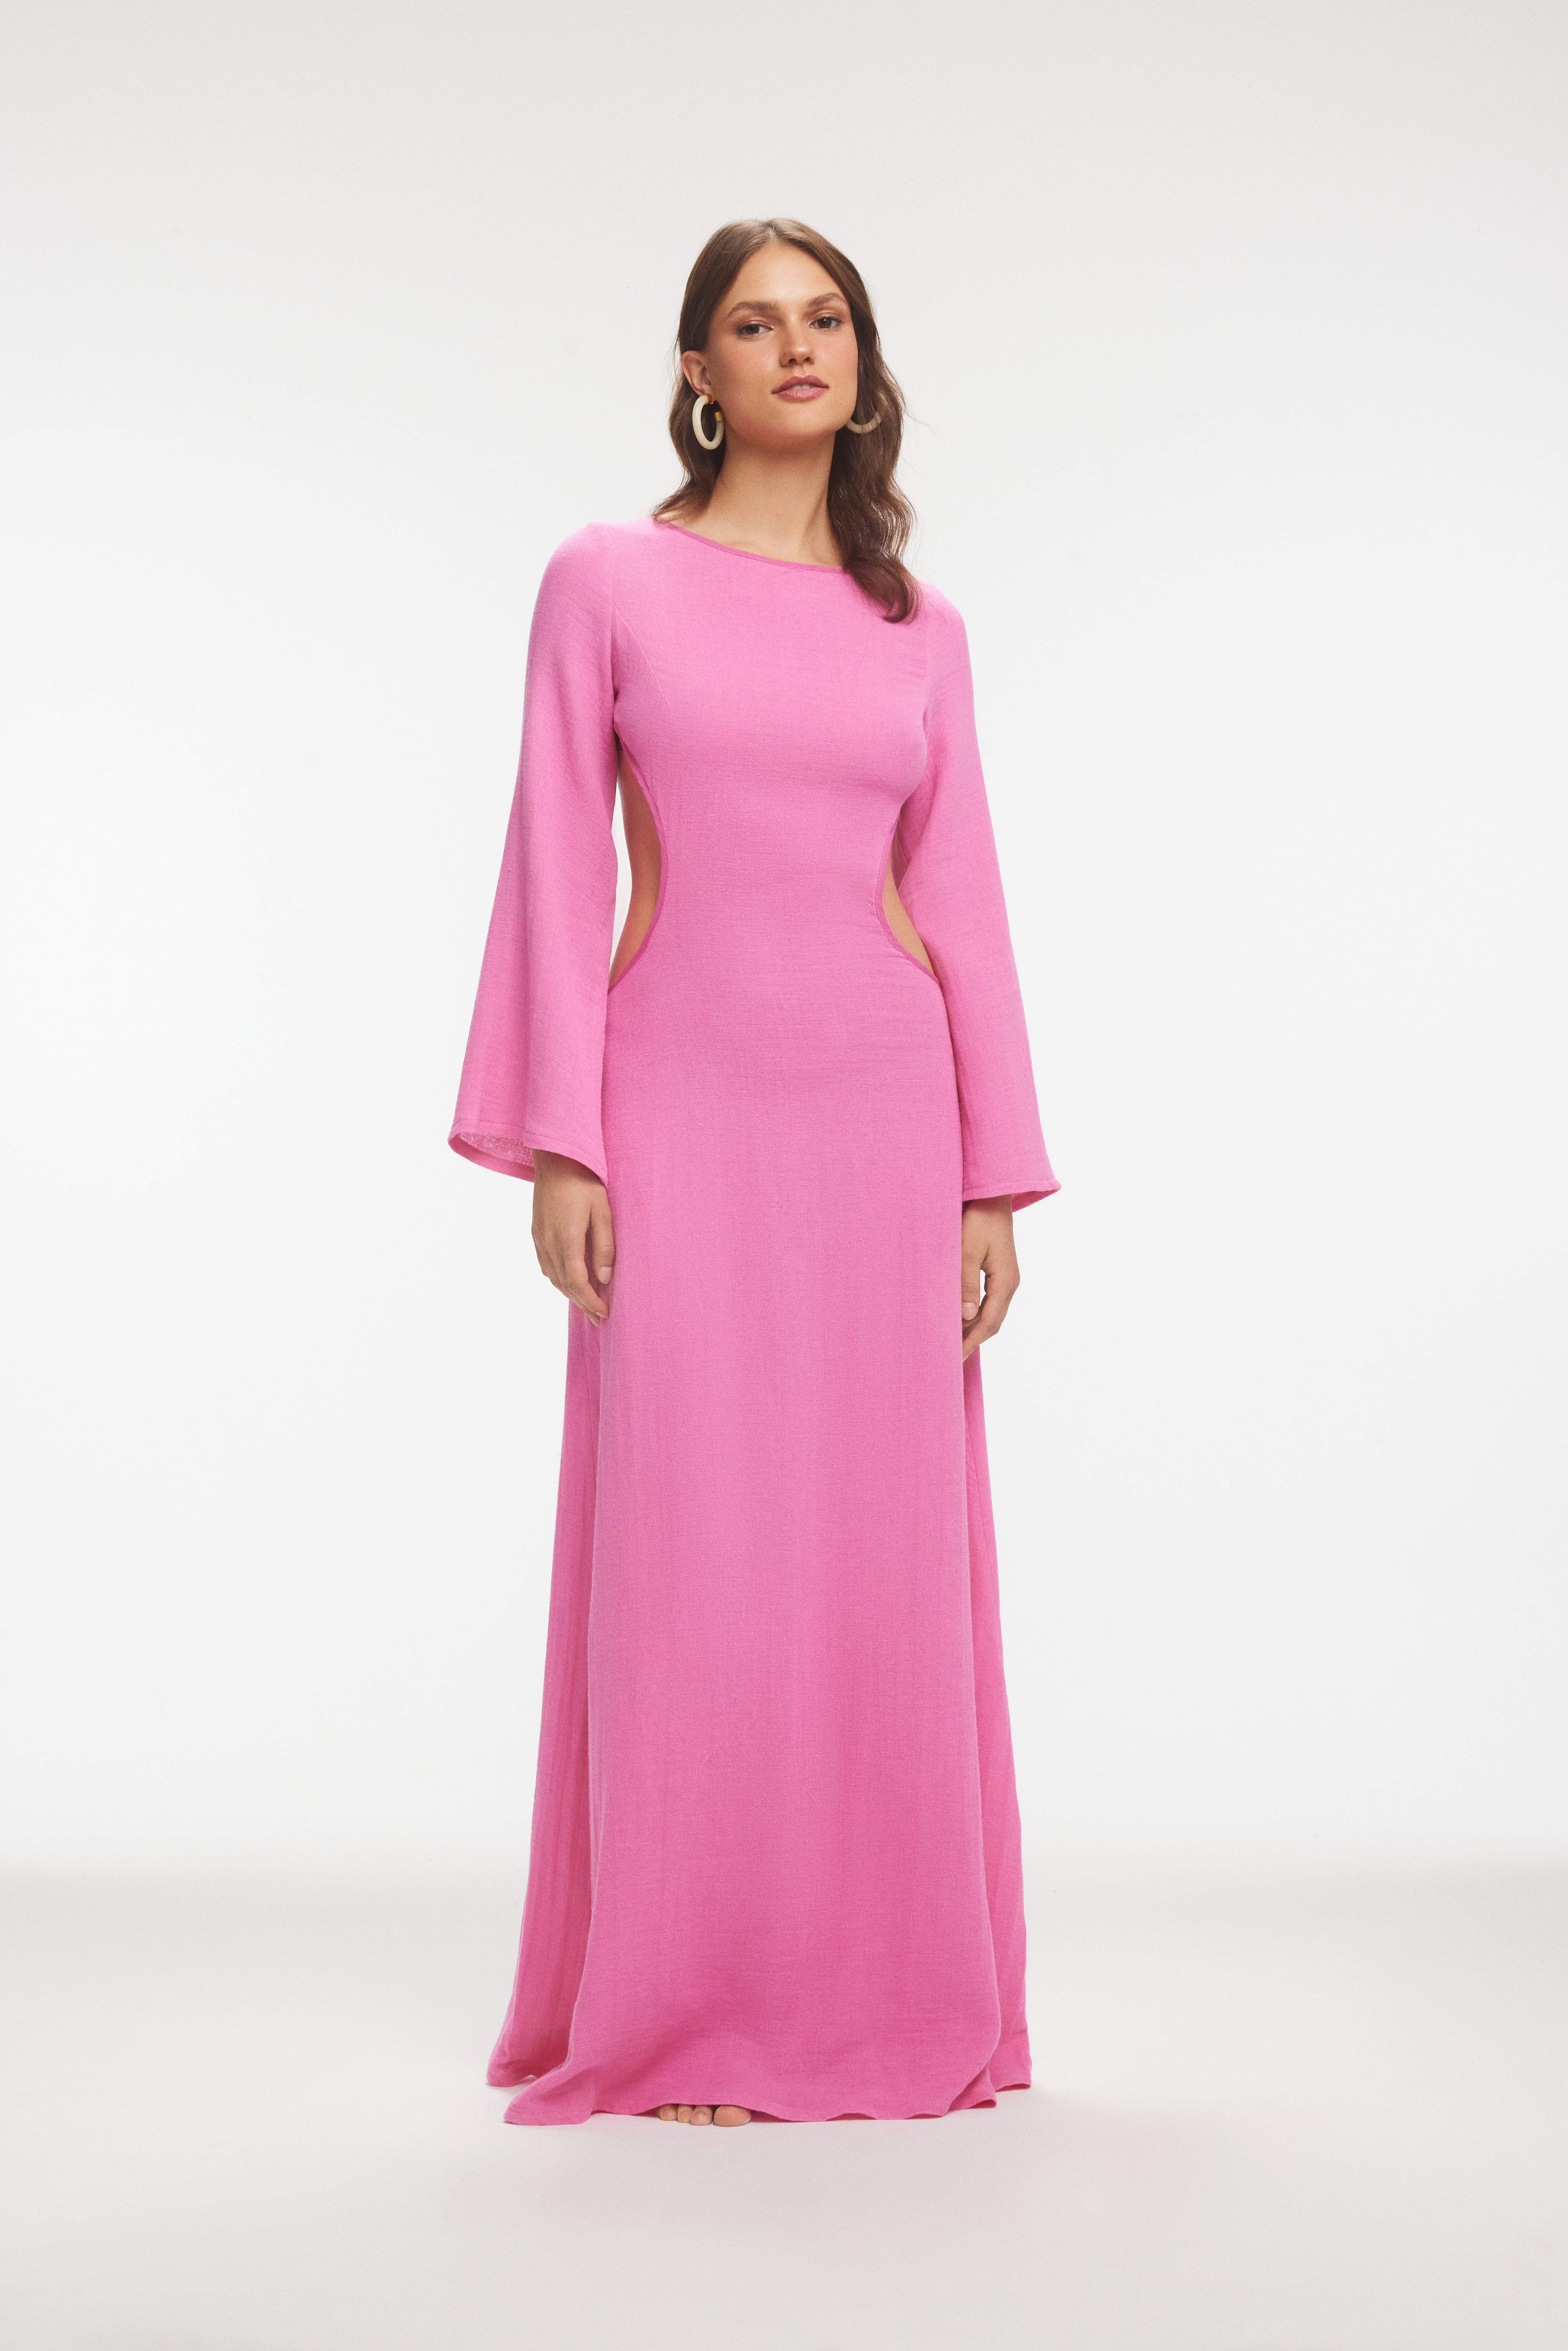  KAYE Low Back Pink Maxi Dress